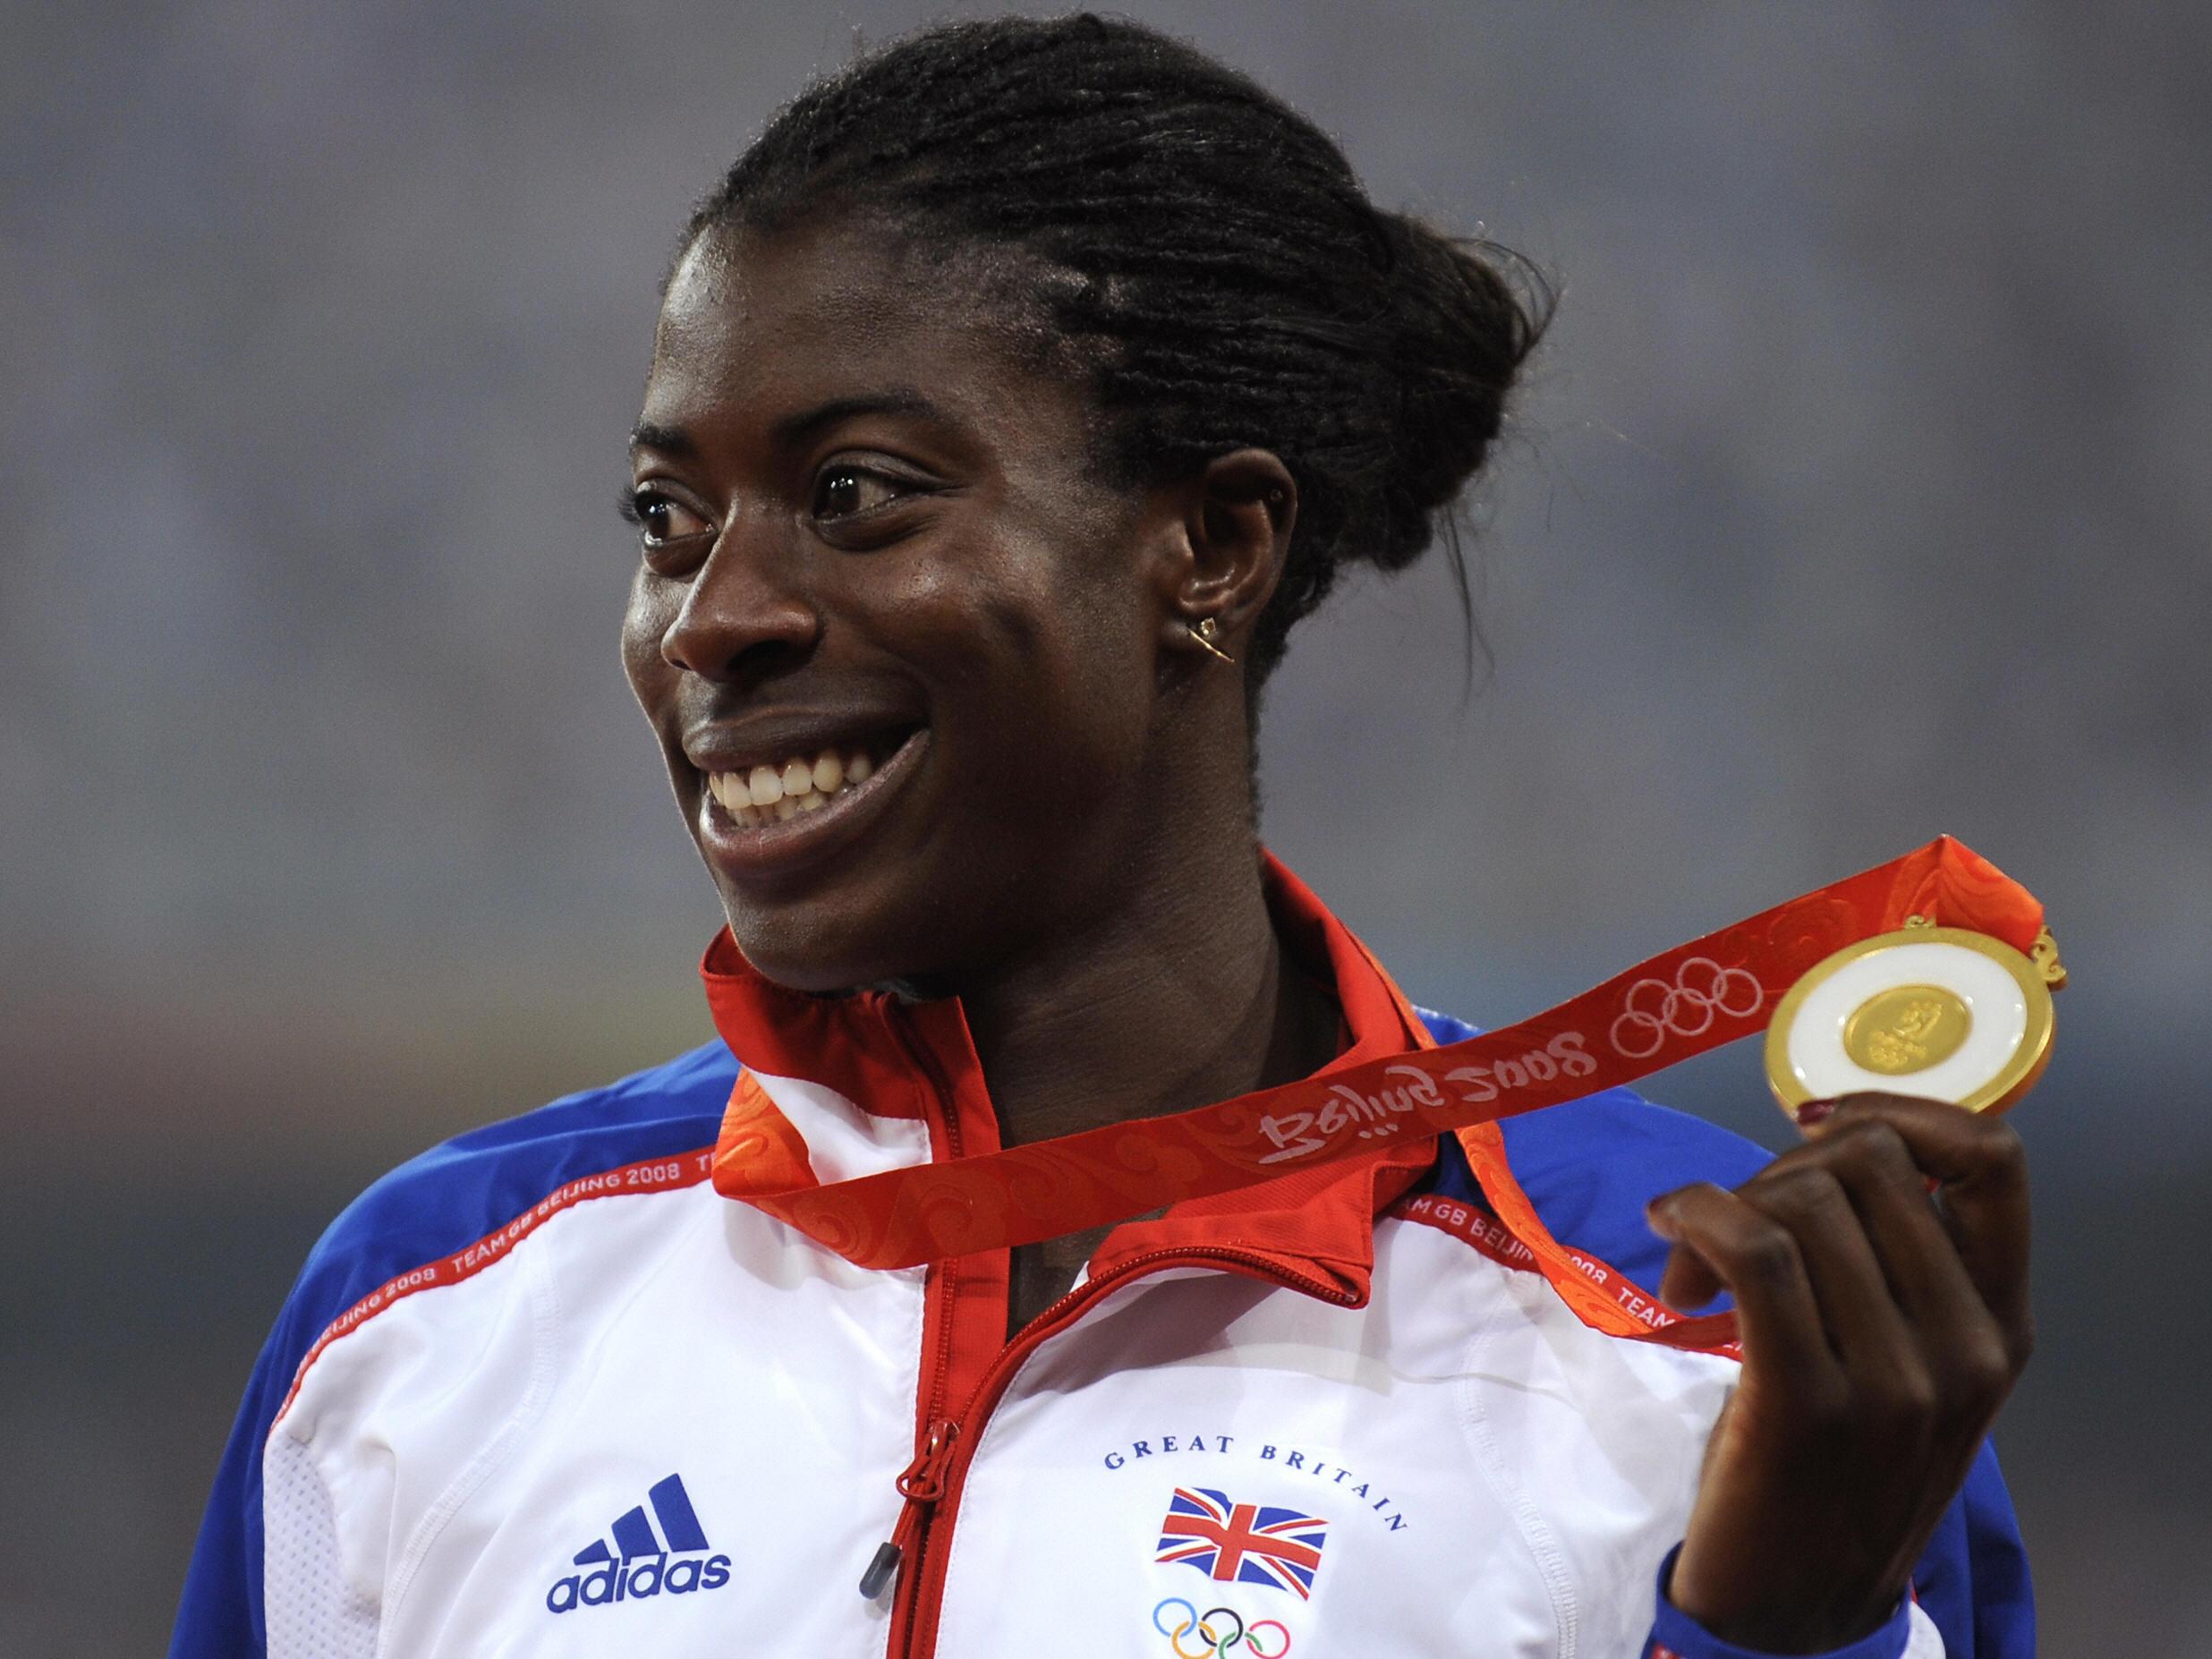 Britain's gold medalist Christine Ohuruogu poses on the podium